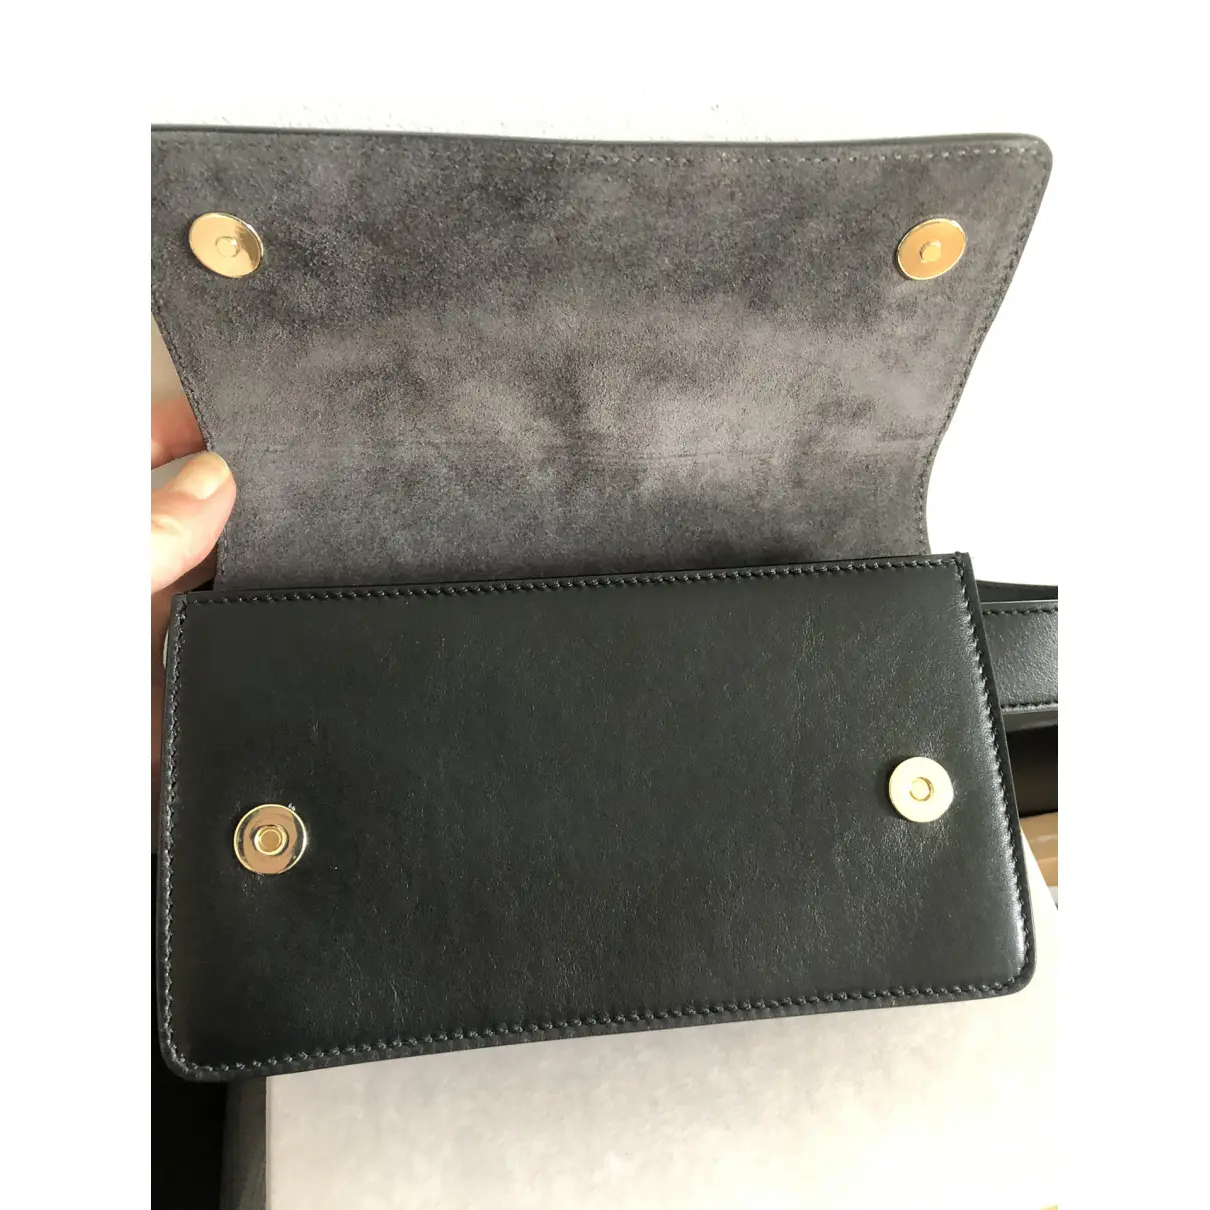 Leather handbag Jimmy Choo